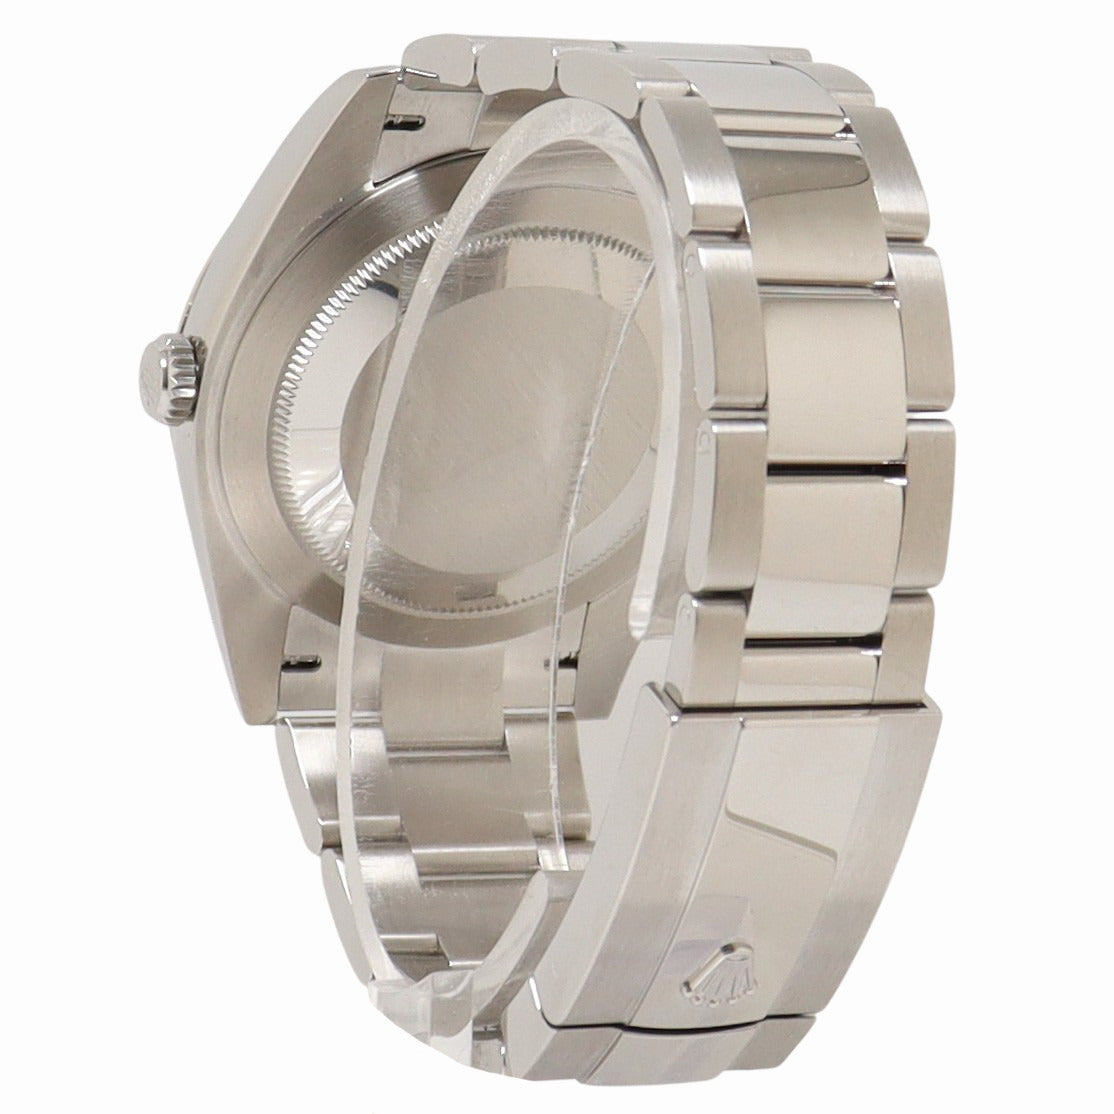 Rolex Datejust 41mm Stainless Steel Mint Green Stick Dial Watch Reference# 126334 - Happy Jewelers Fine Jewelry Lifetime Warranty